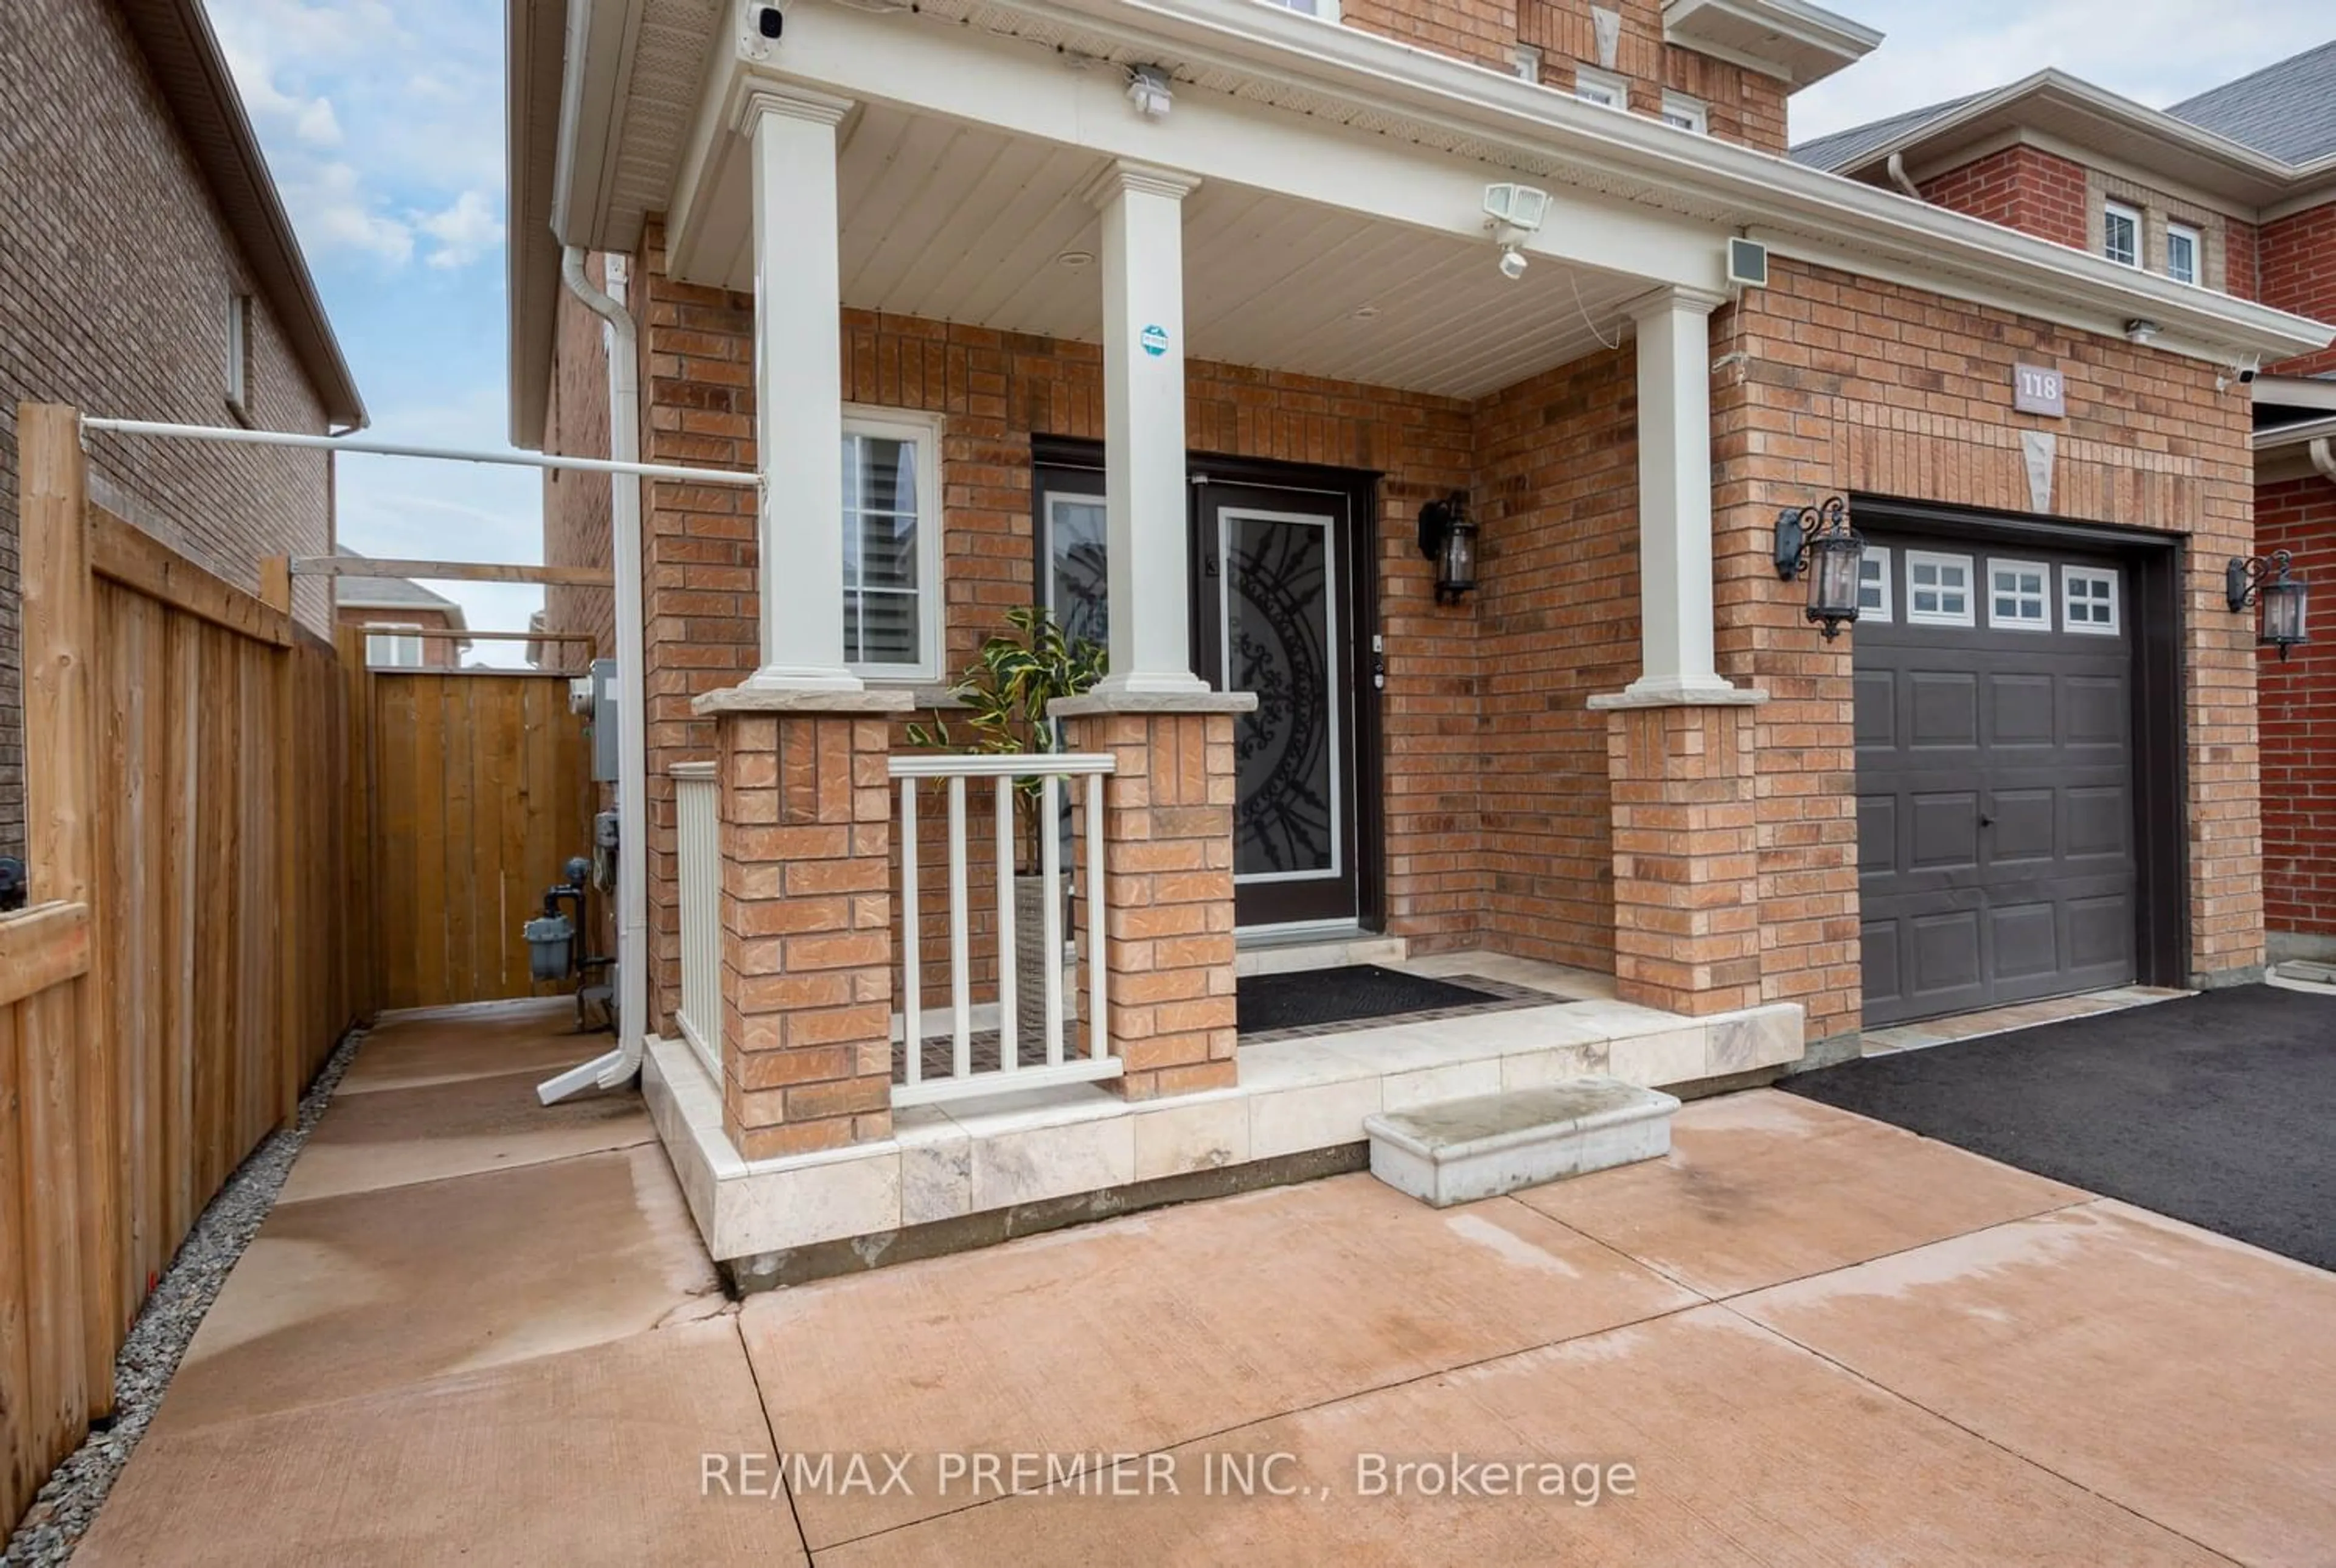 Home with brick exterior material for 118 Footbridge Cres, Brampton Ontario L6R 0T9